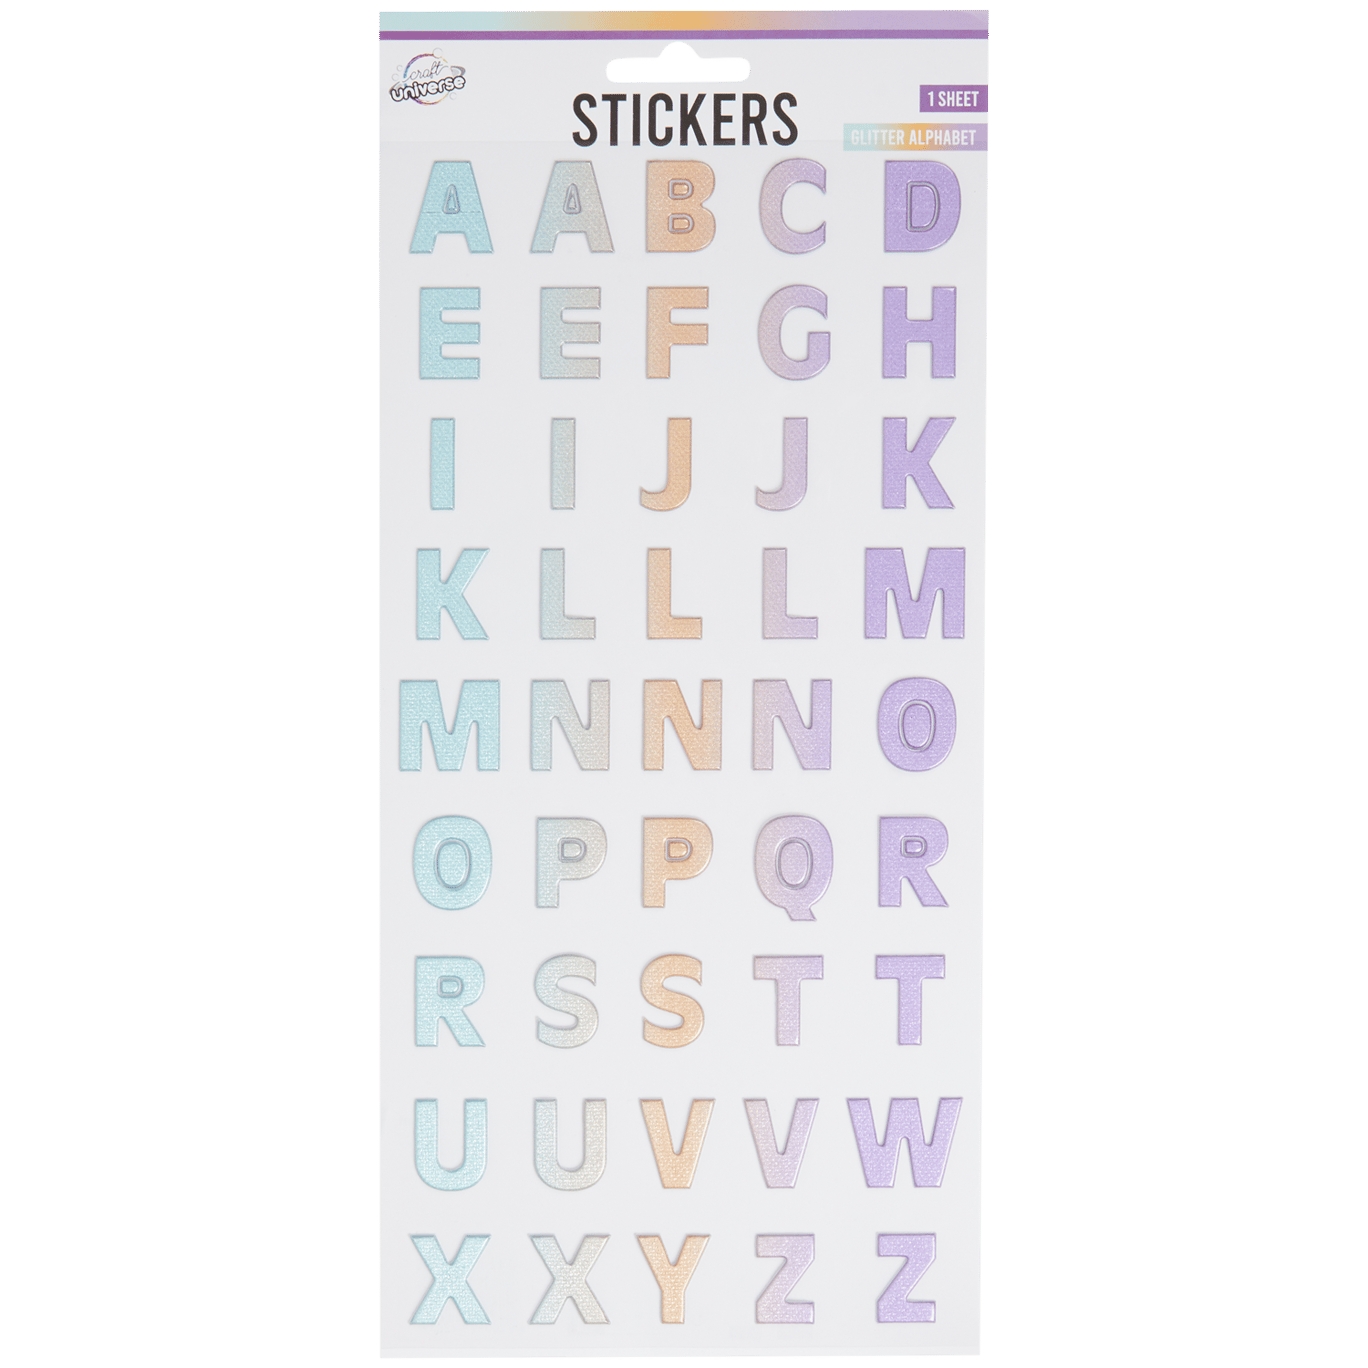 Autocollants alphabet